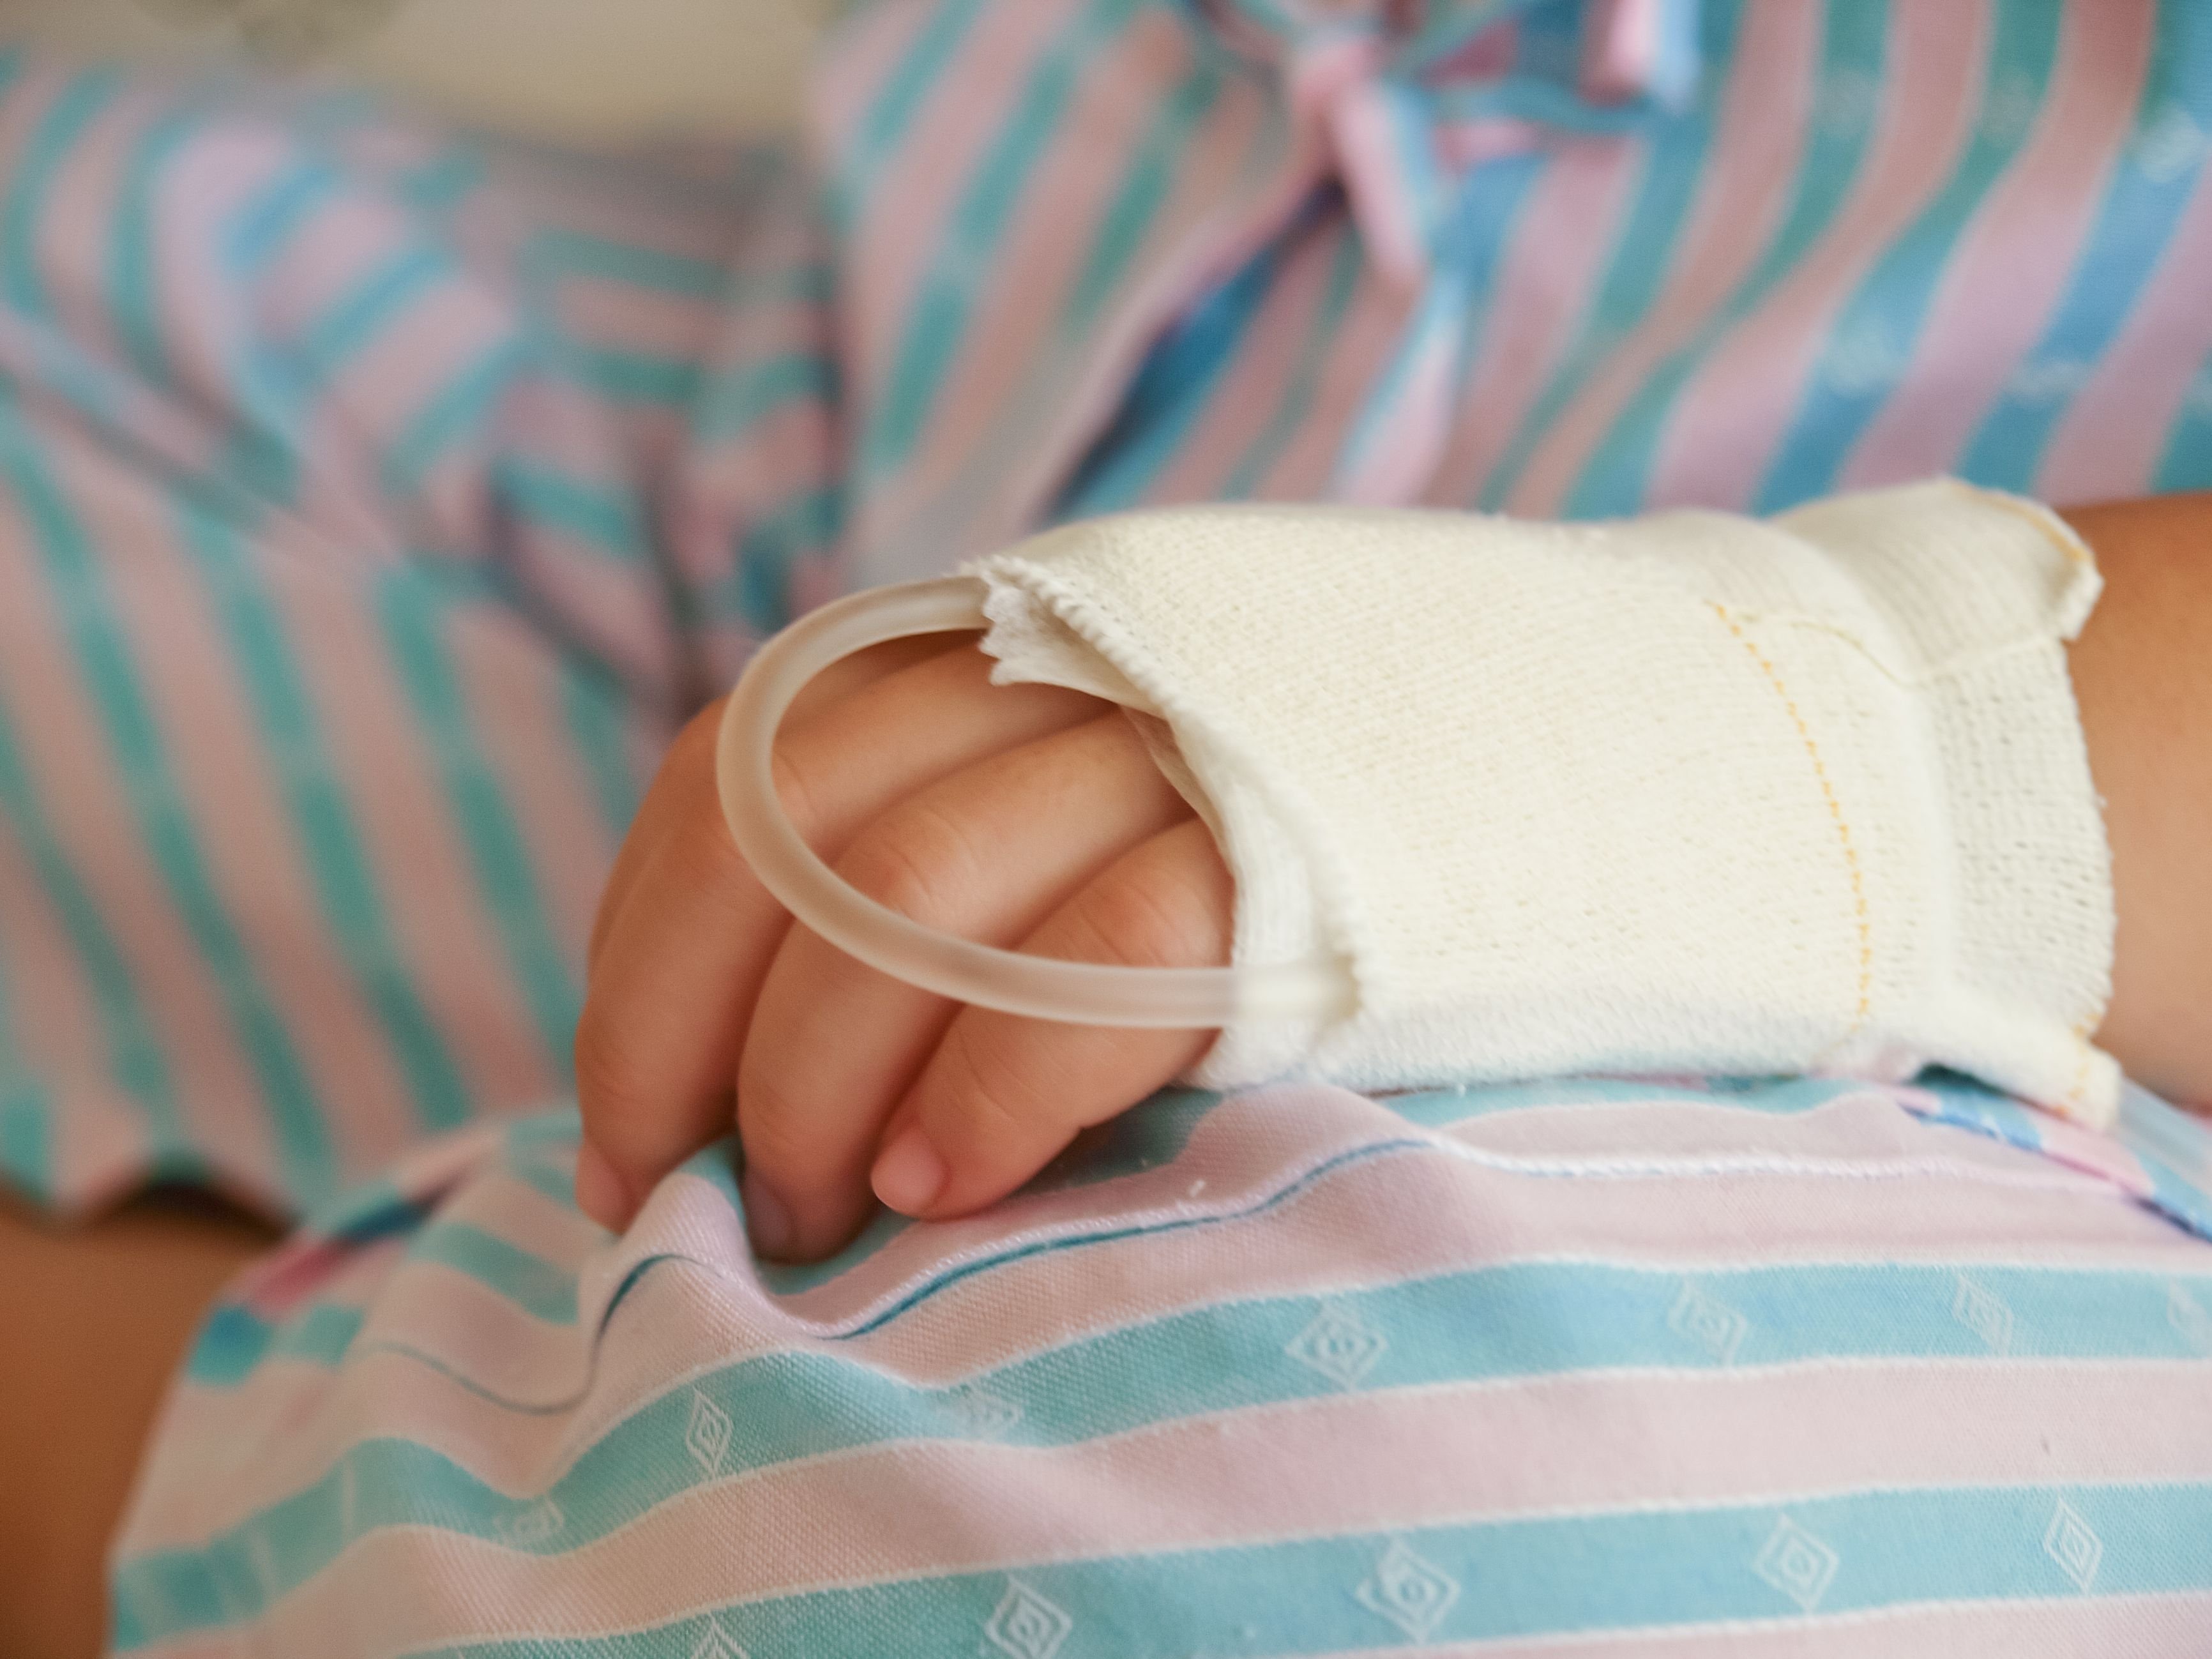 Niño hospitalizado. | Foto: Shutterstock